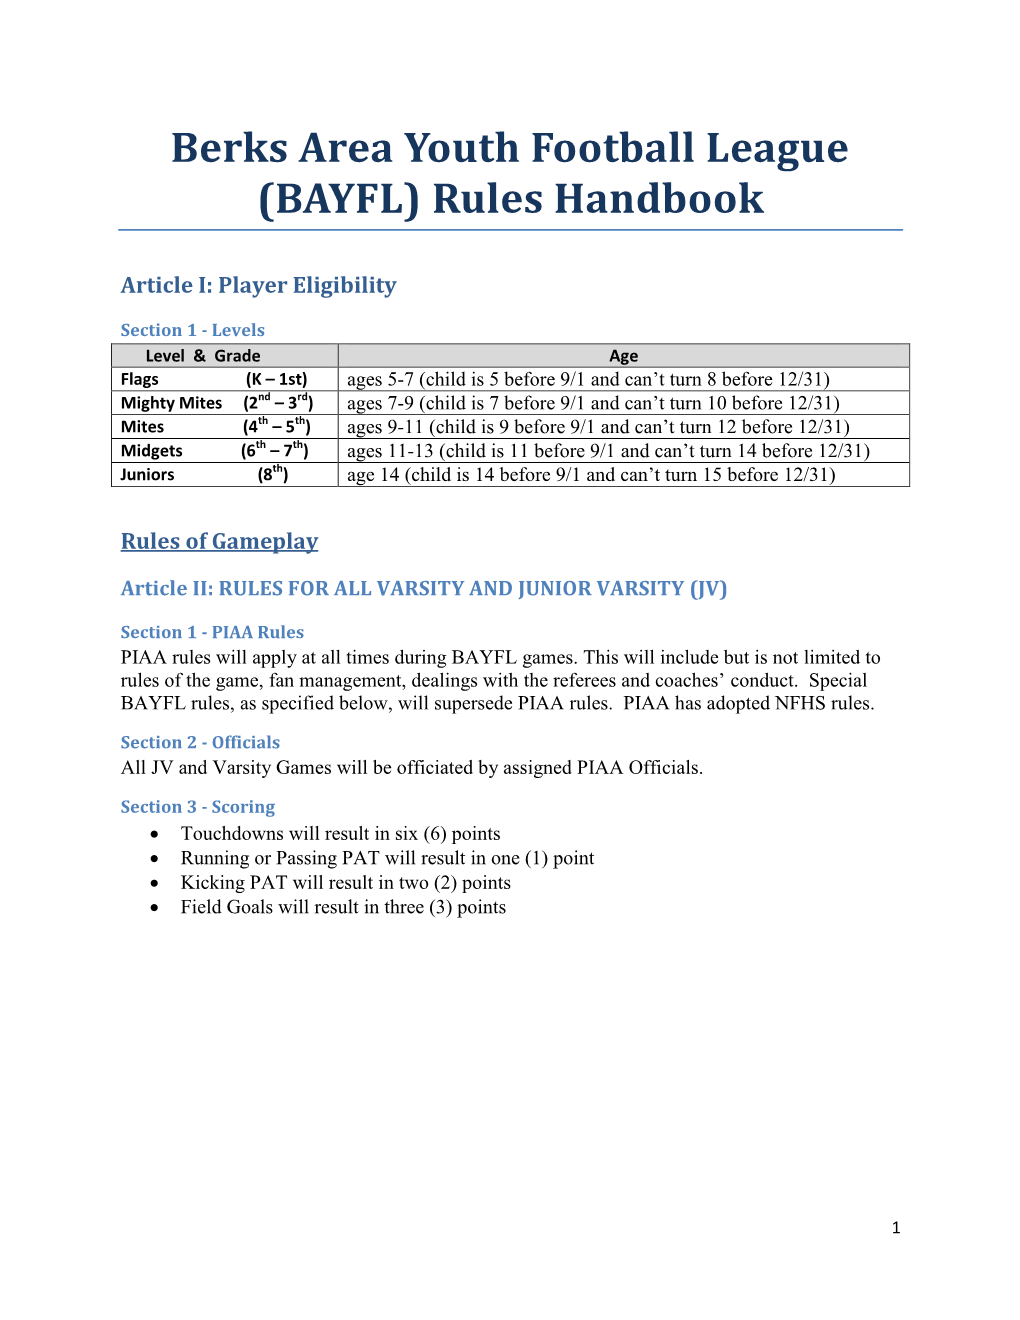 Berks Area Youth Football League (BAYFL) Rules Handbook